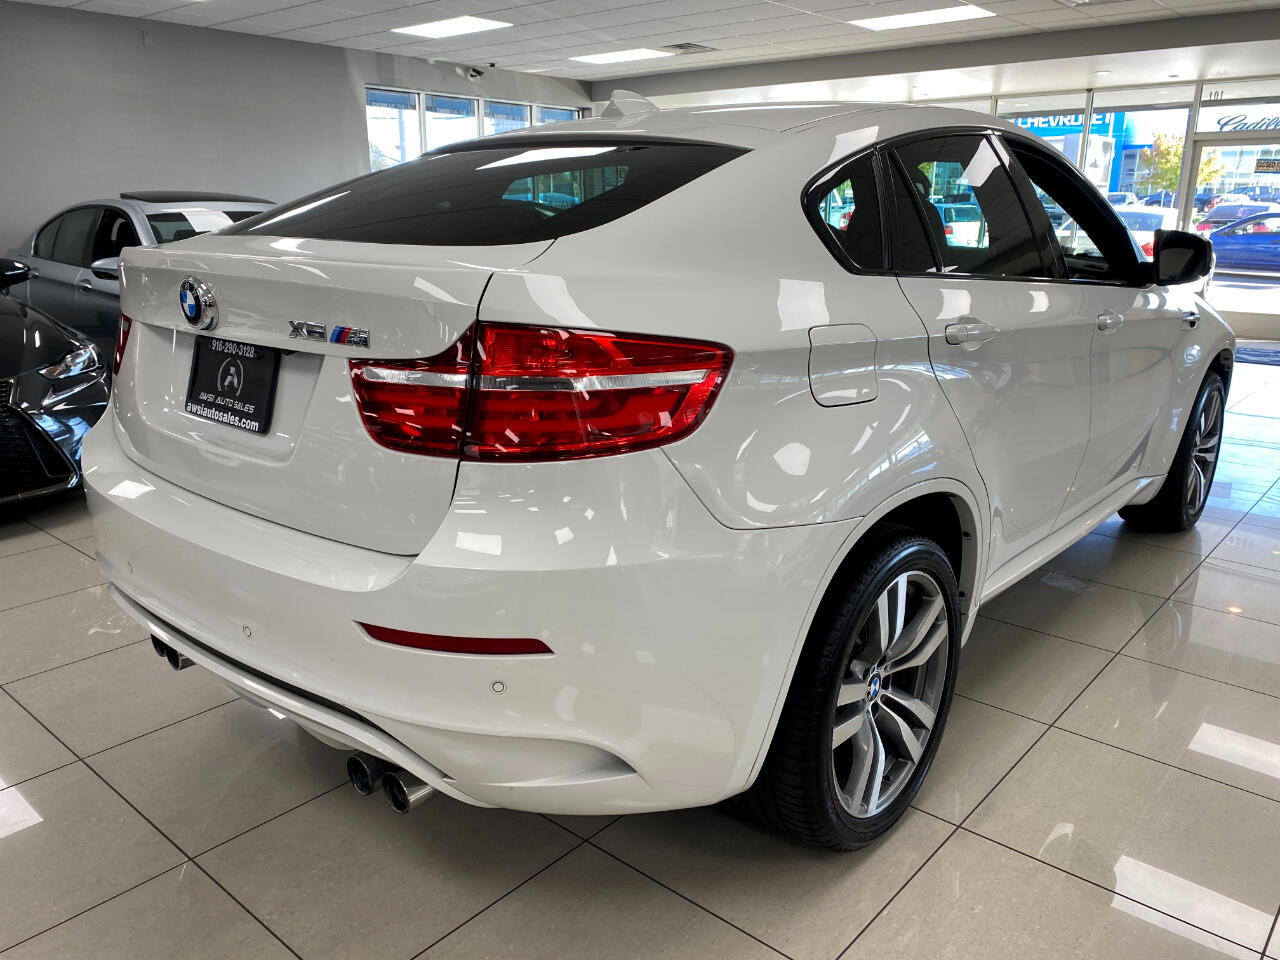 Used 2014 BMW X6 M for Sale in Sacramento CA 95821 AWSI Auto Sales